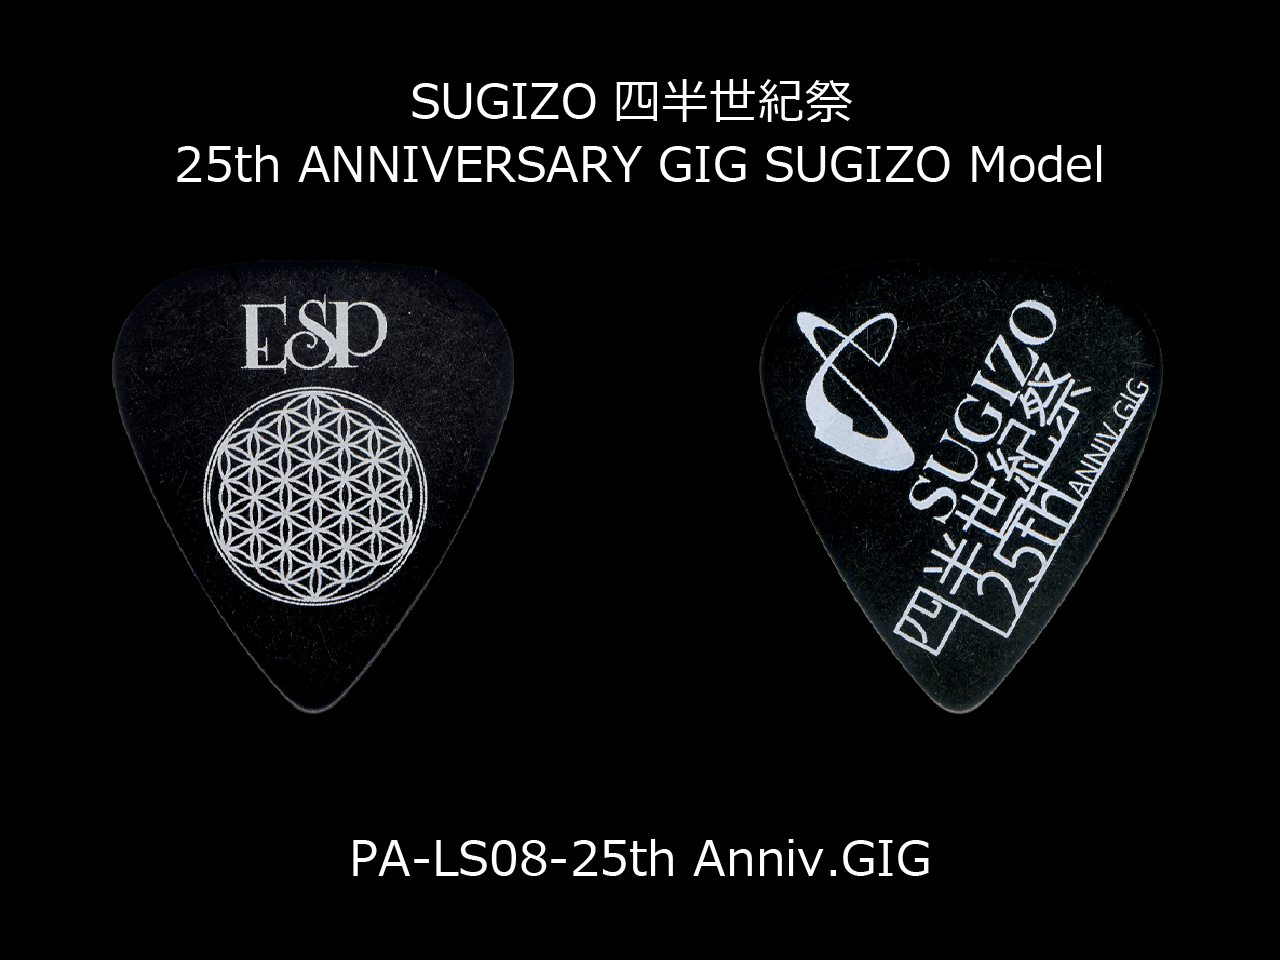 ESP(イーエスピー) Artist Pick Series PA-LS08-25th Anniv.GIG SUGIZO 四半世紀祭 25th ANNIVERSARY GIG SUGIZO Model (LUNA SEA/SUGIZOモデル)